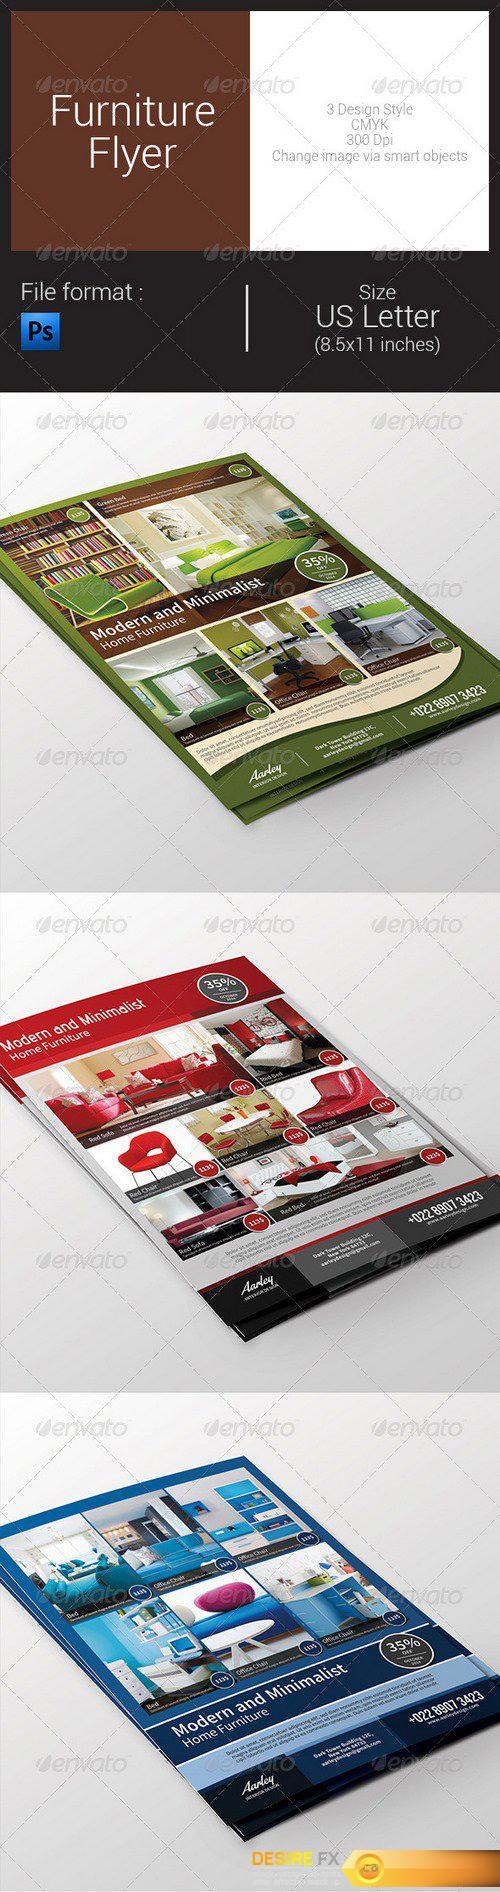 Graphicriver - Furniture Flyer 8550093